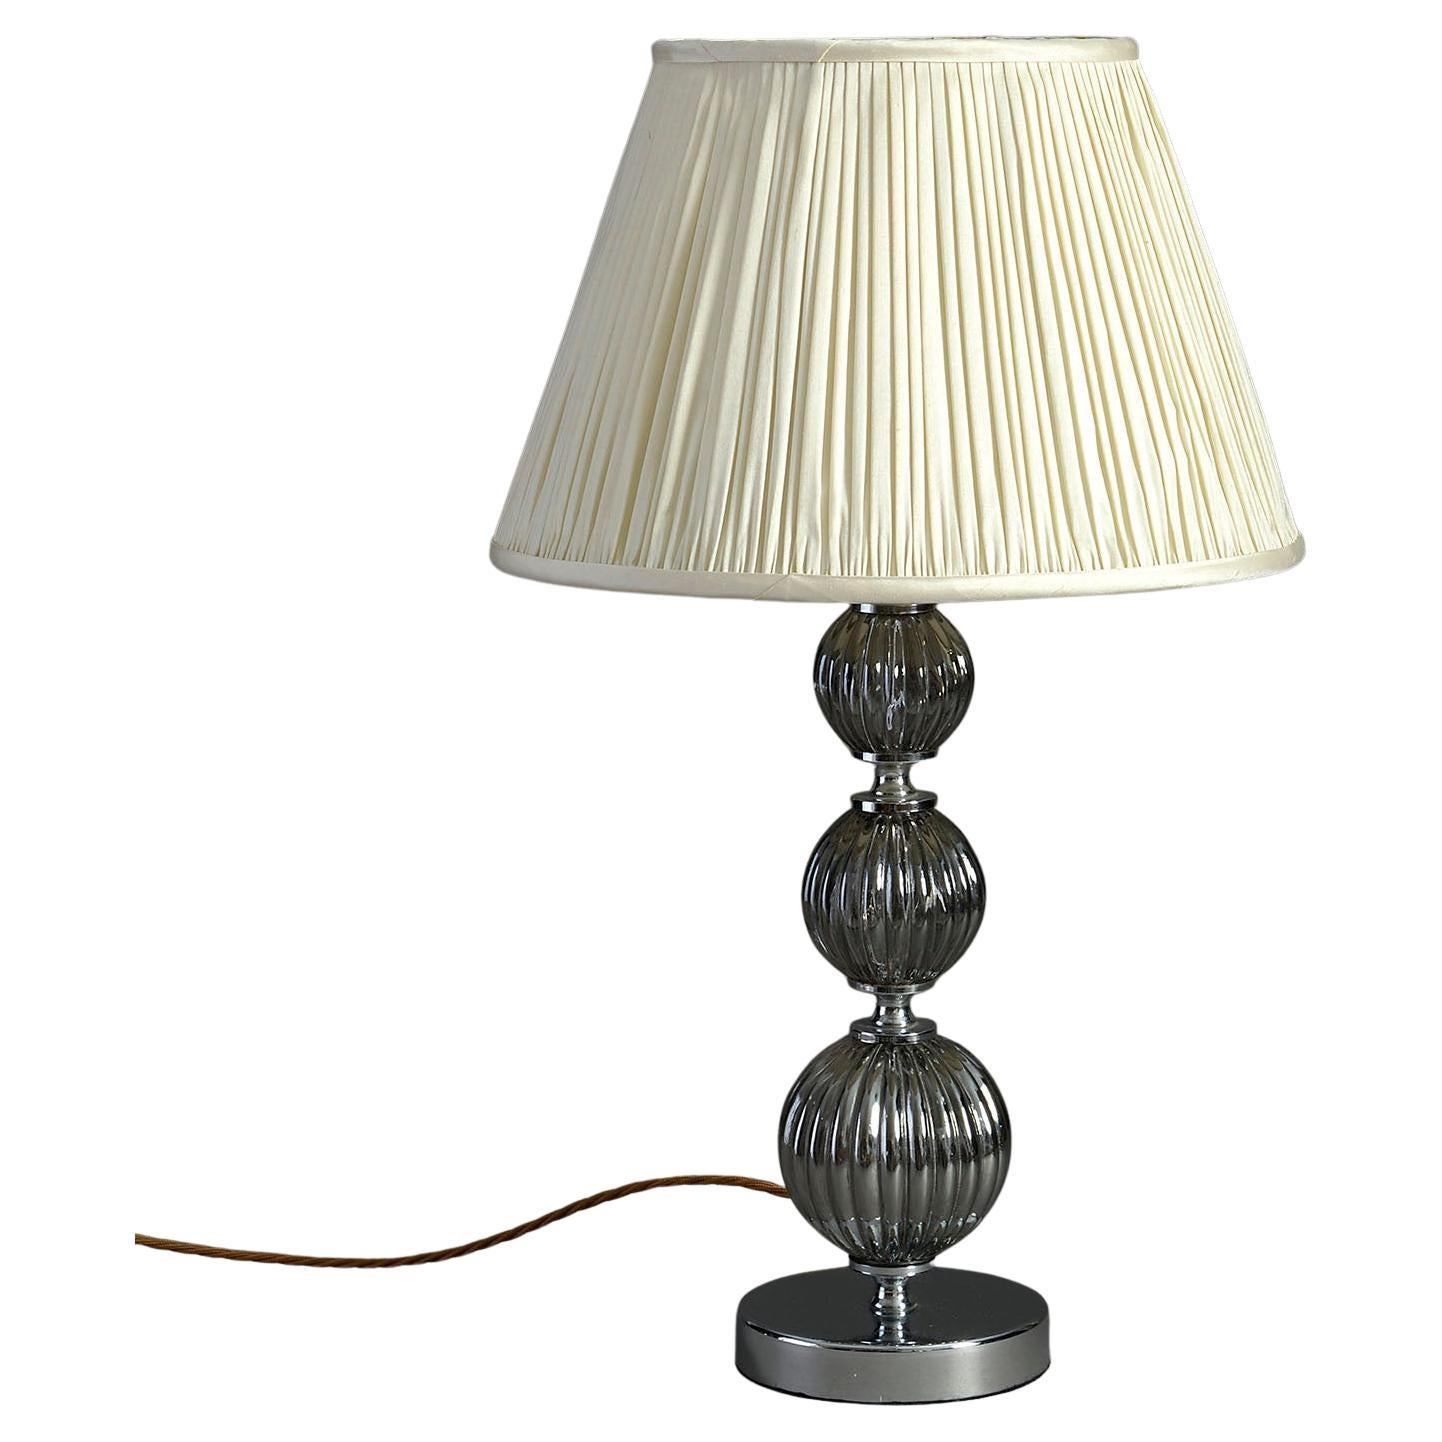 Mid-20th Century Modernist Glass & Chrome Table Lamp